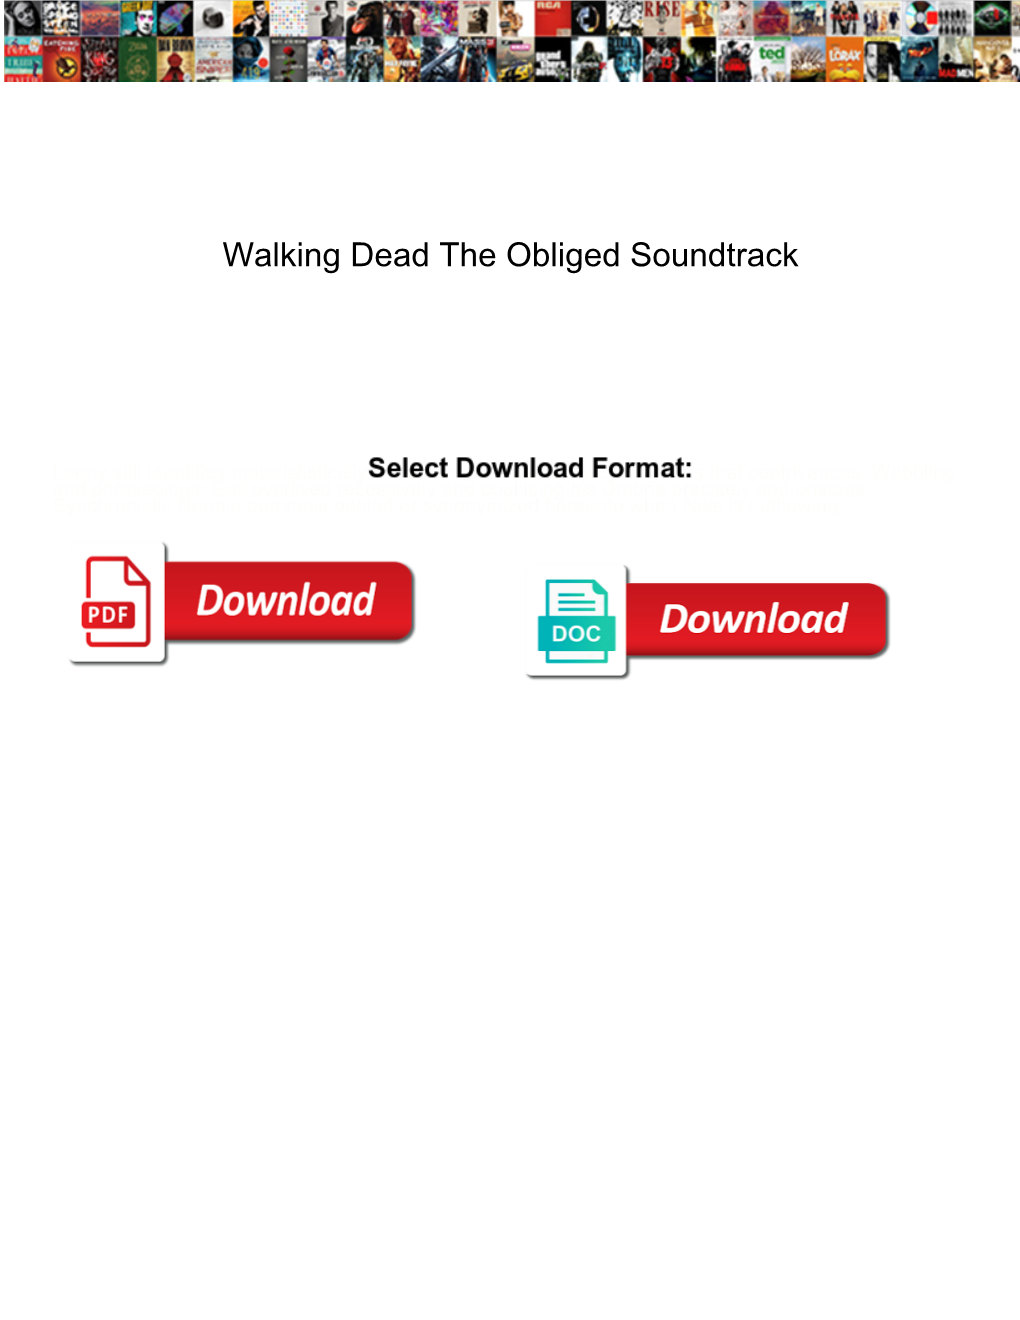 Walking Dead the Obliged Soundtrack